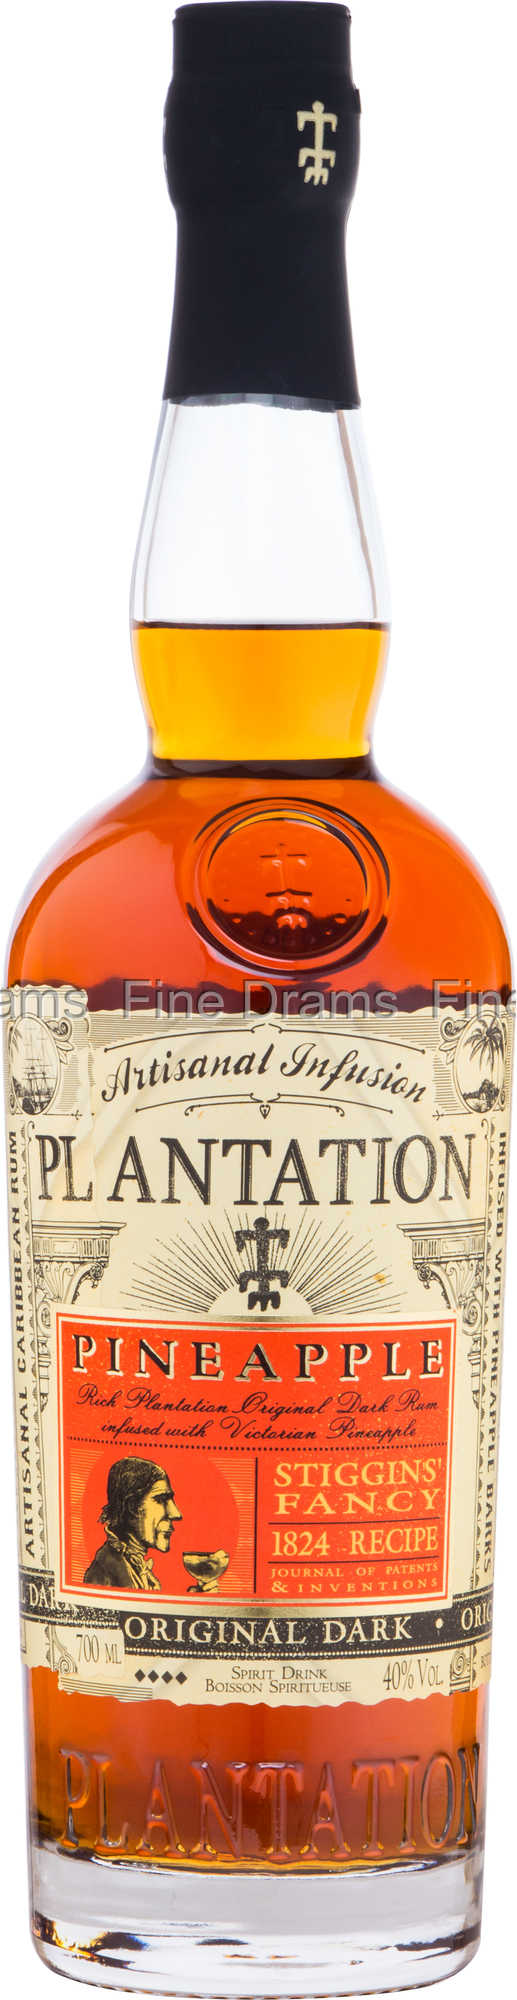 Plantation Pineapple Stiggins\' Fancy Rum